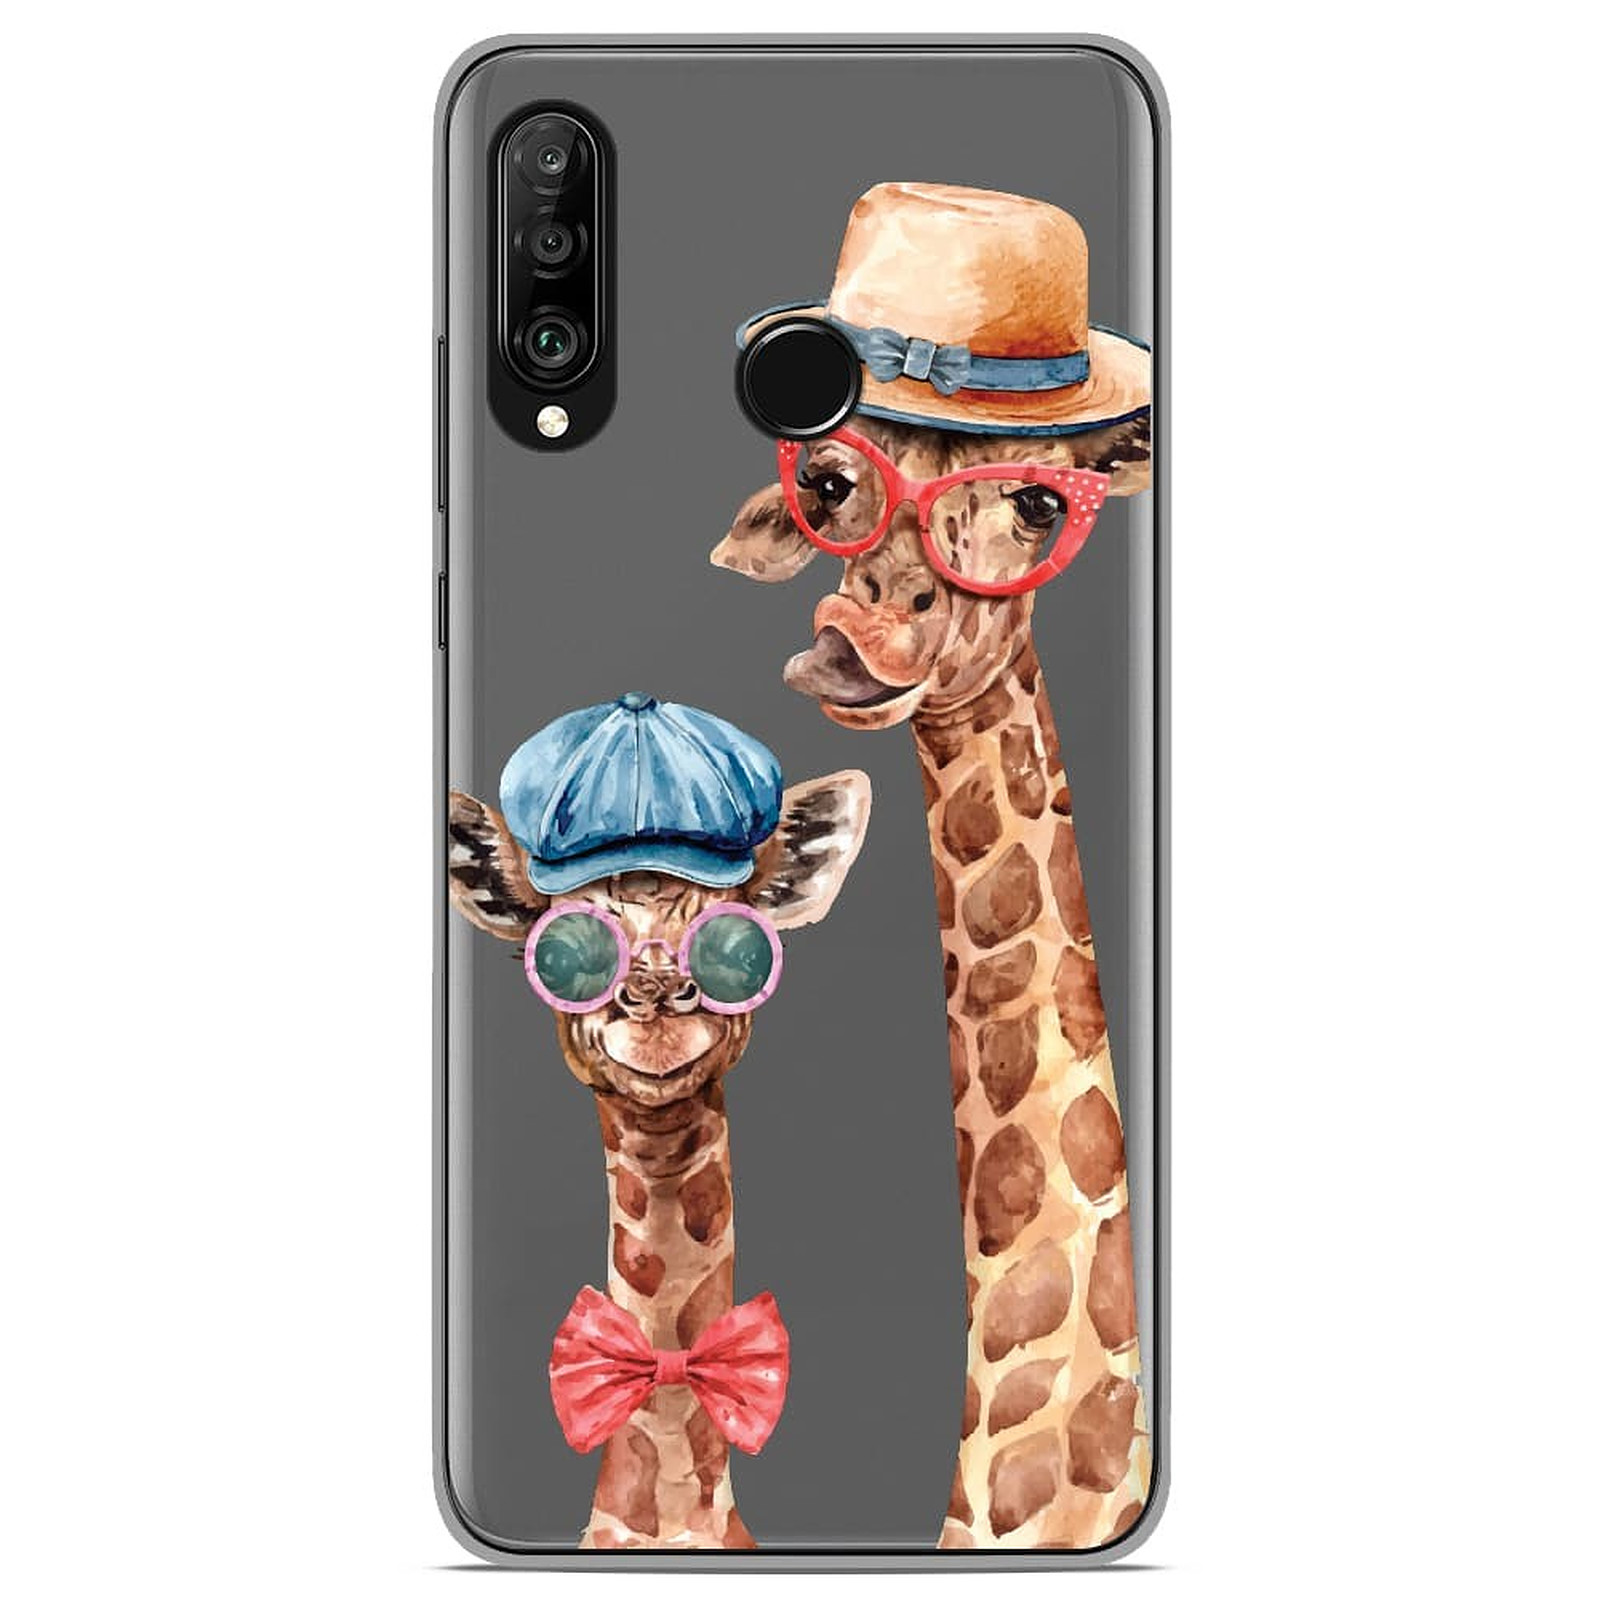 1001 Coques Coque silicone gel Huawei P30 Lite motif Funny Girafe - Coque telephone 1001Coques